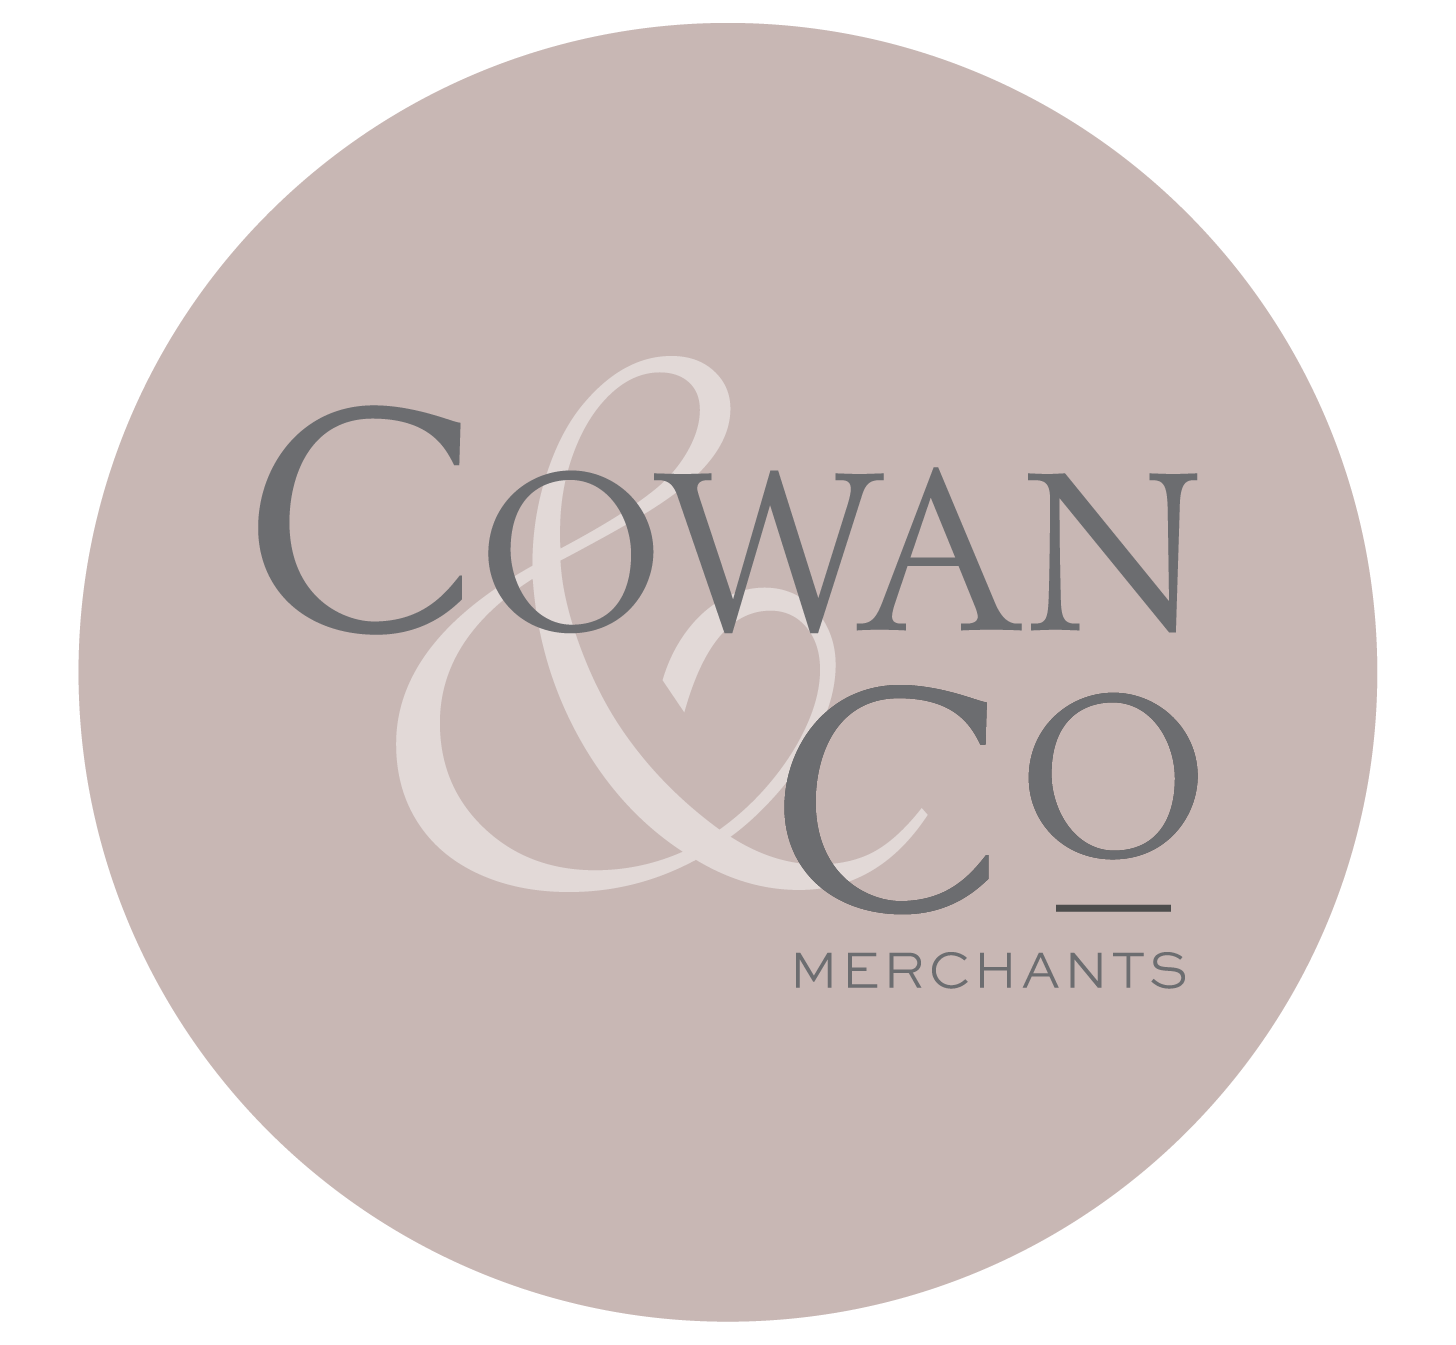 Cowan & co merchants logo